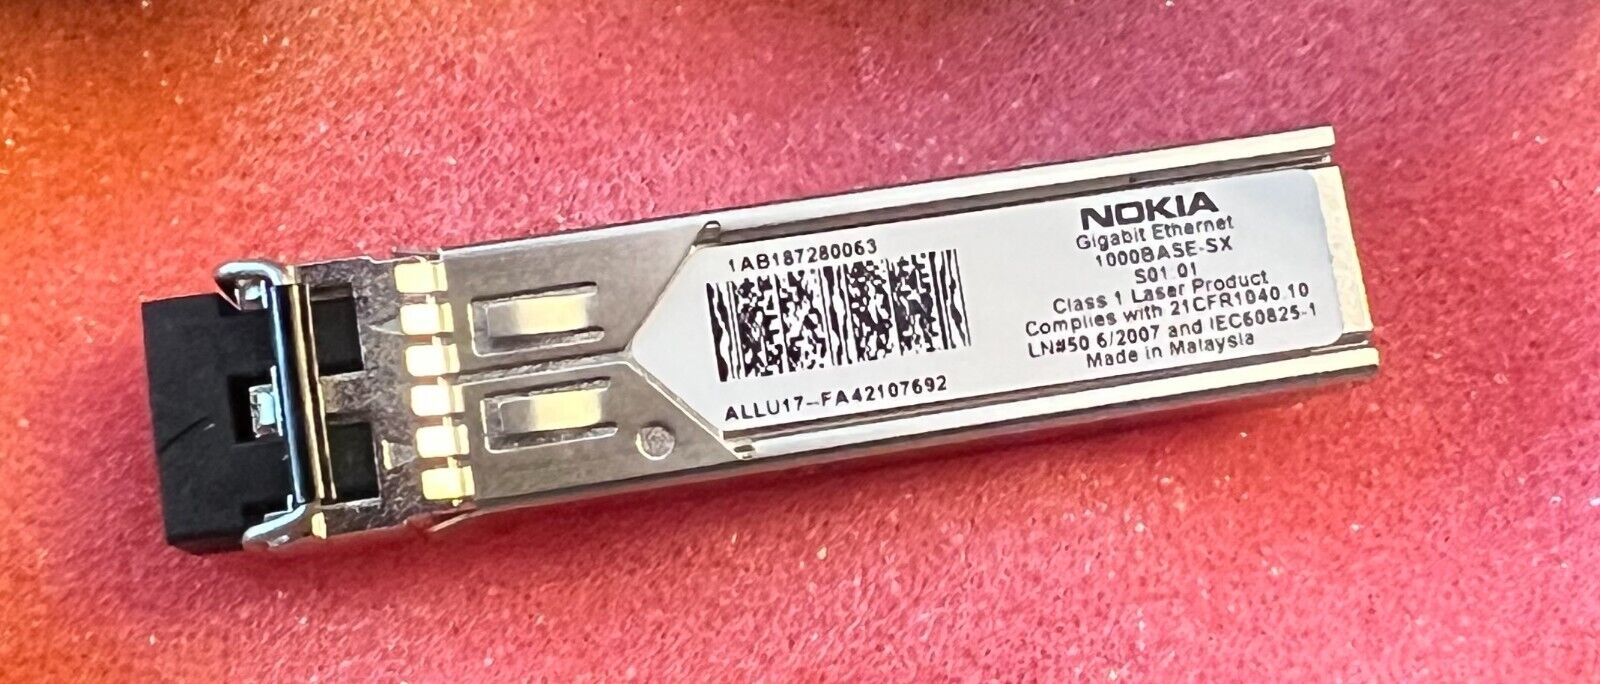 Lot of 10, Brand New Genuine Nokia 1AB187280063  Gigabit Ethernet Transceivers